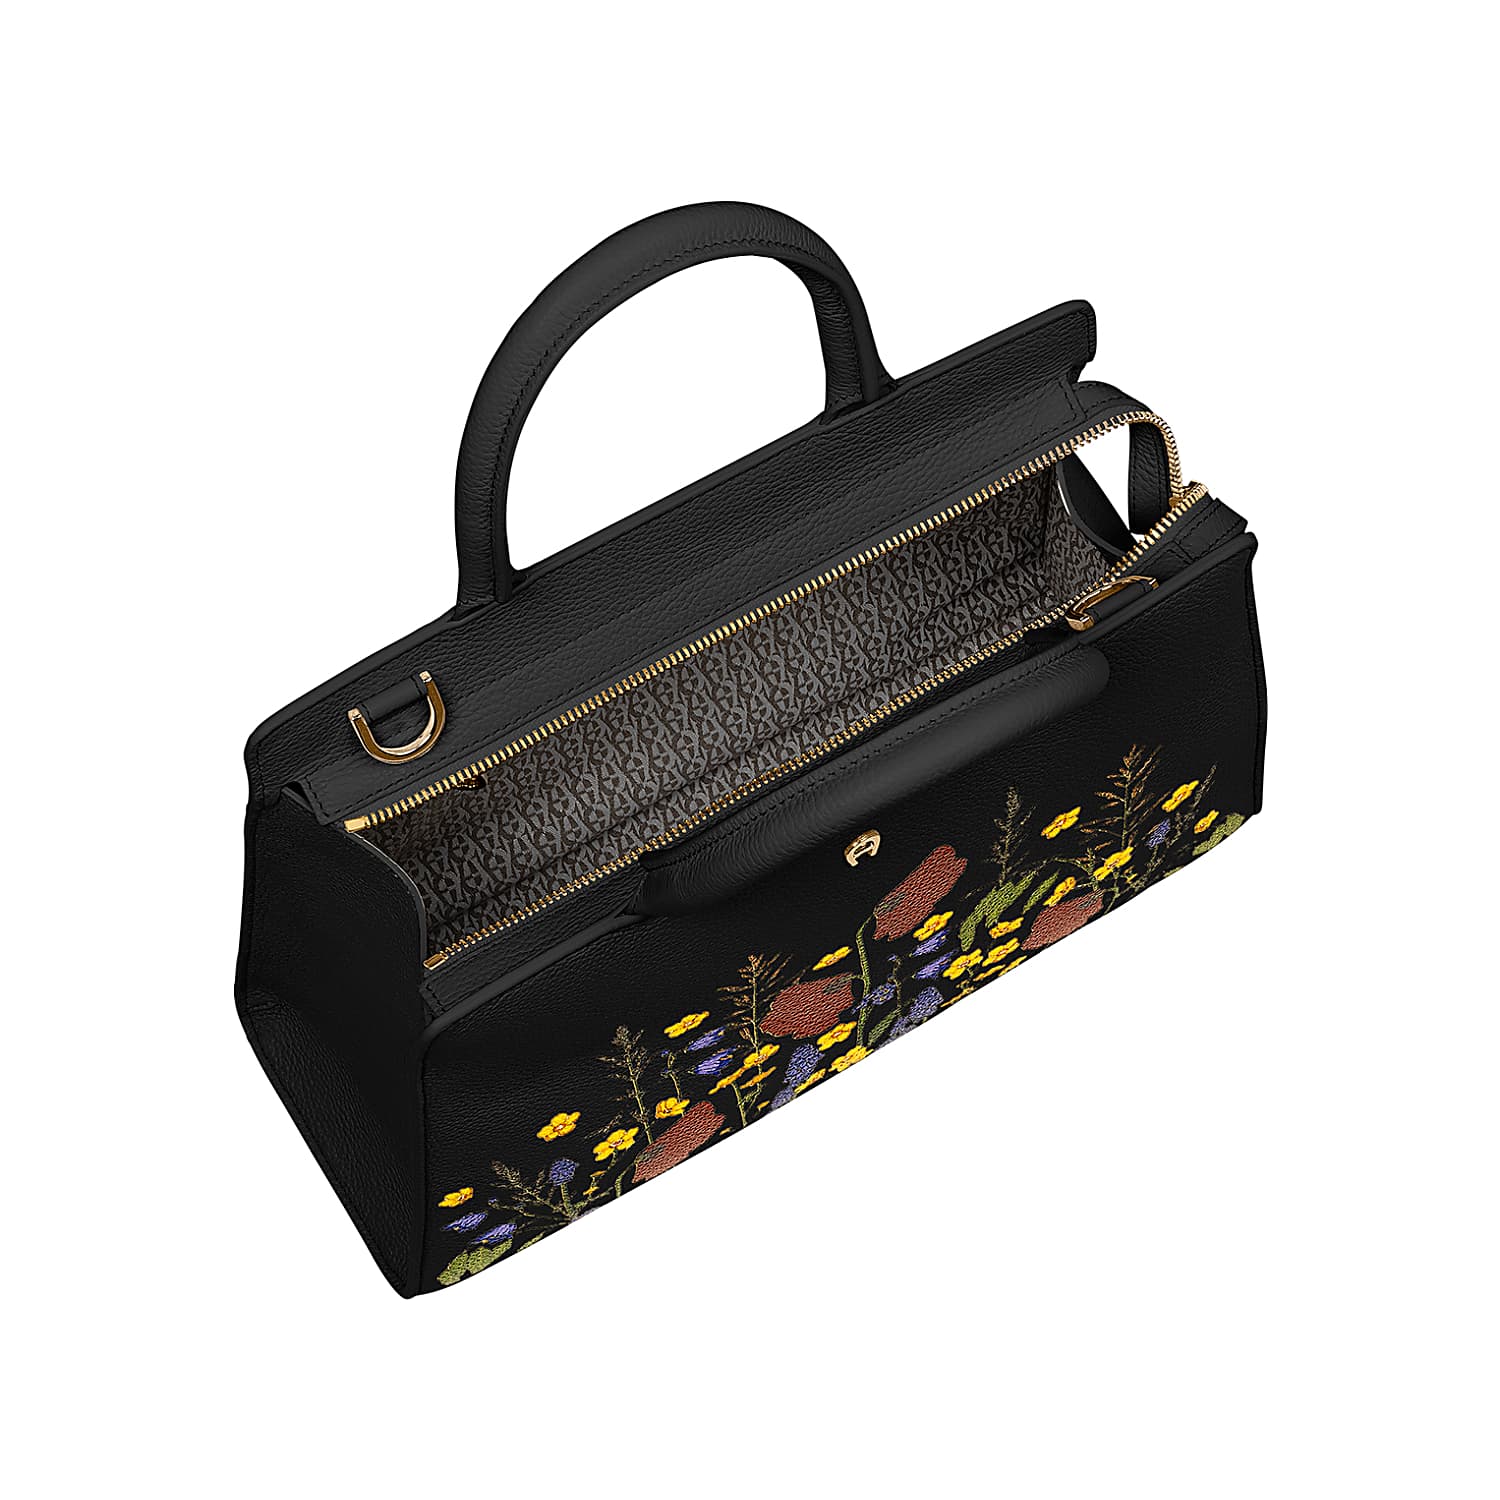 Cybill Fiorellina Handbag S